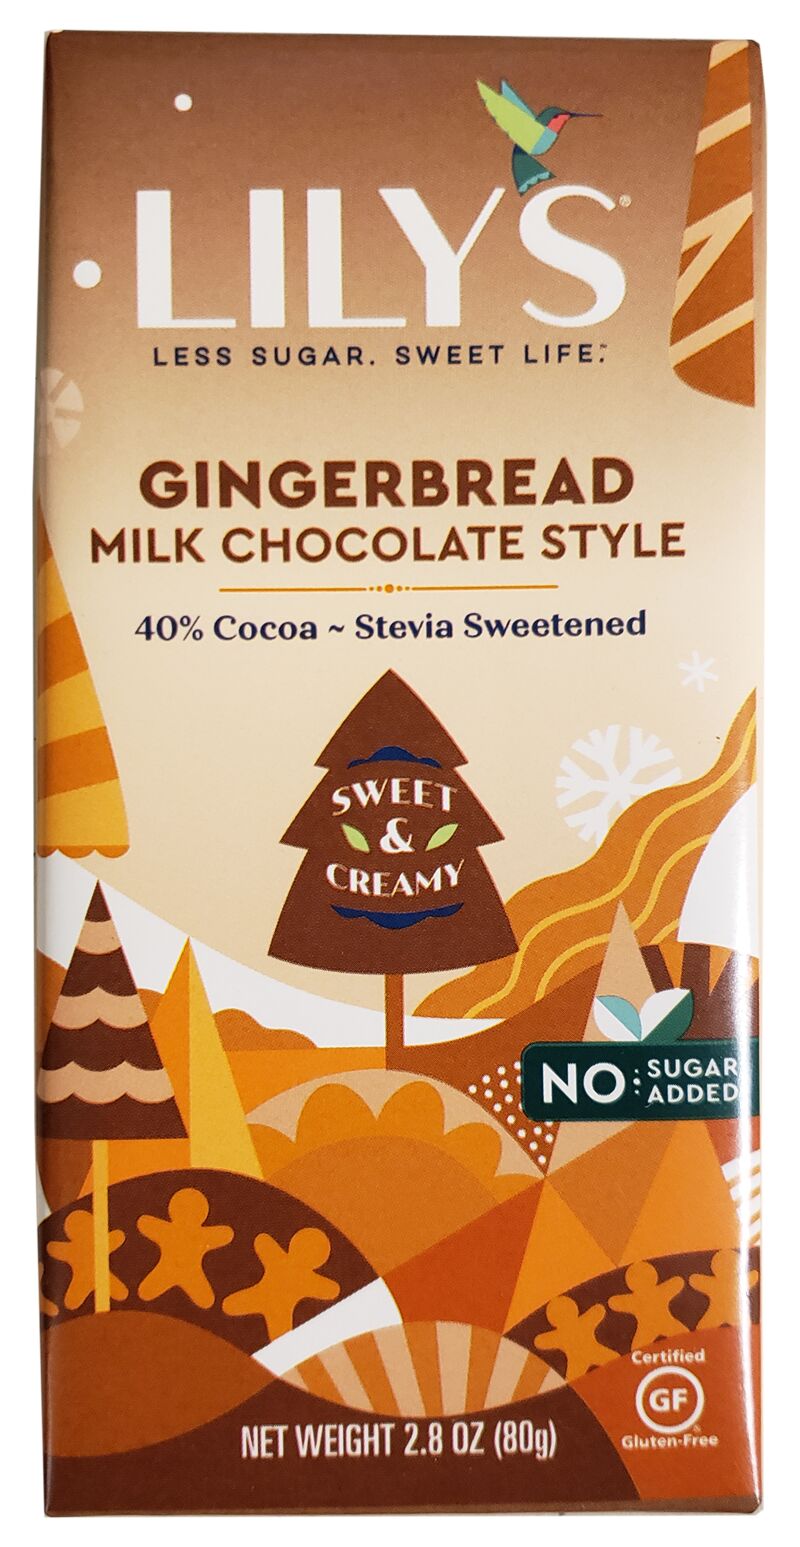 #Flavor_Gingerbread #Size_12 bars